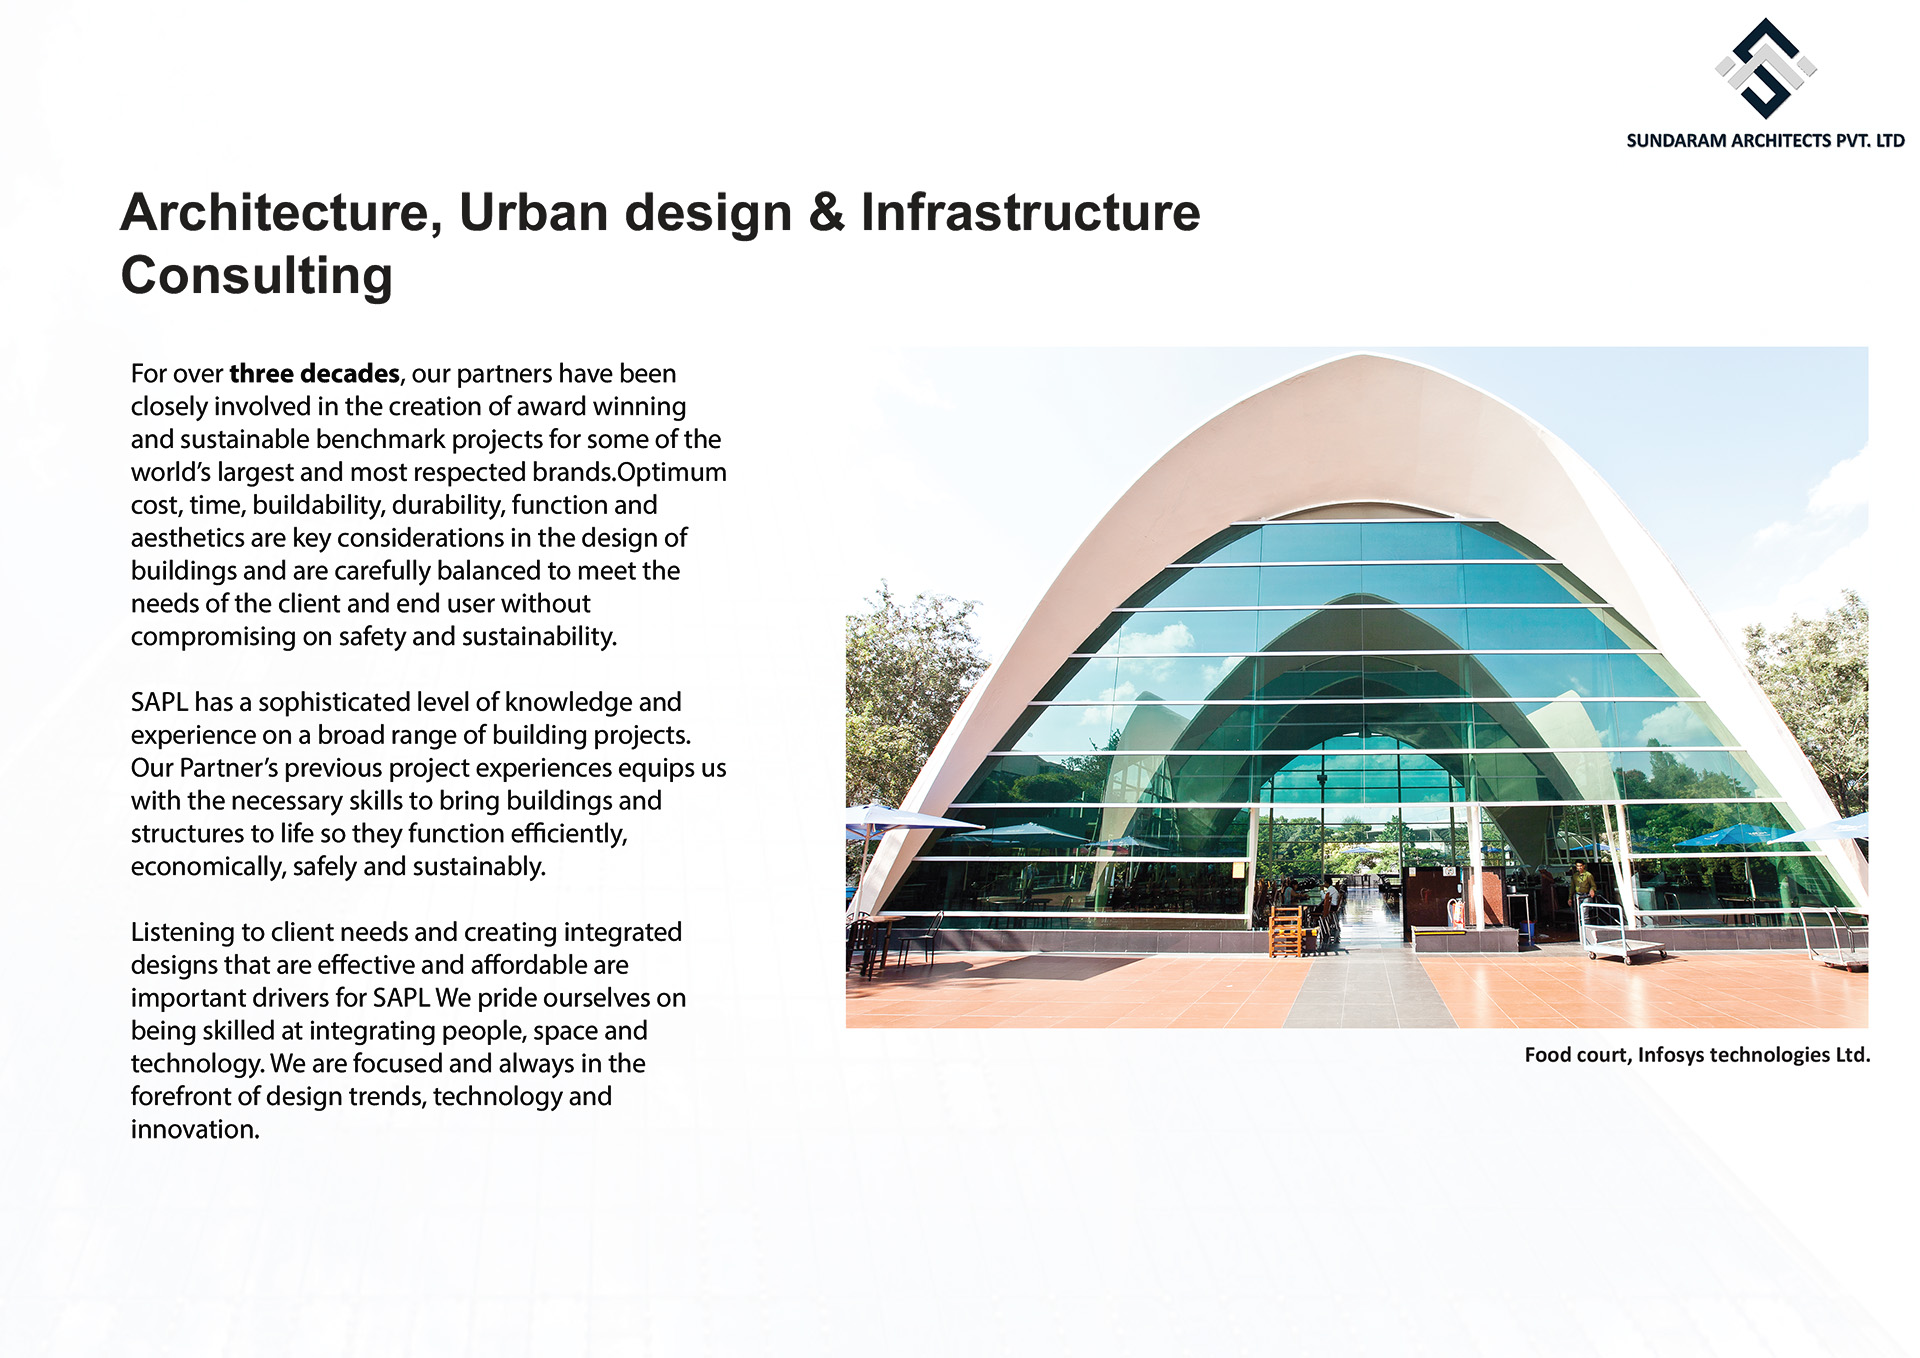 Urban Design Services for Sundaram Architects - Best Urban Design & Master Planning Consultancy Firm in Bangalore, India